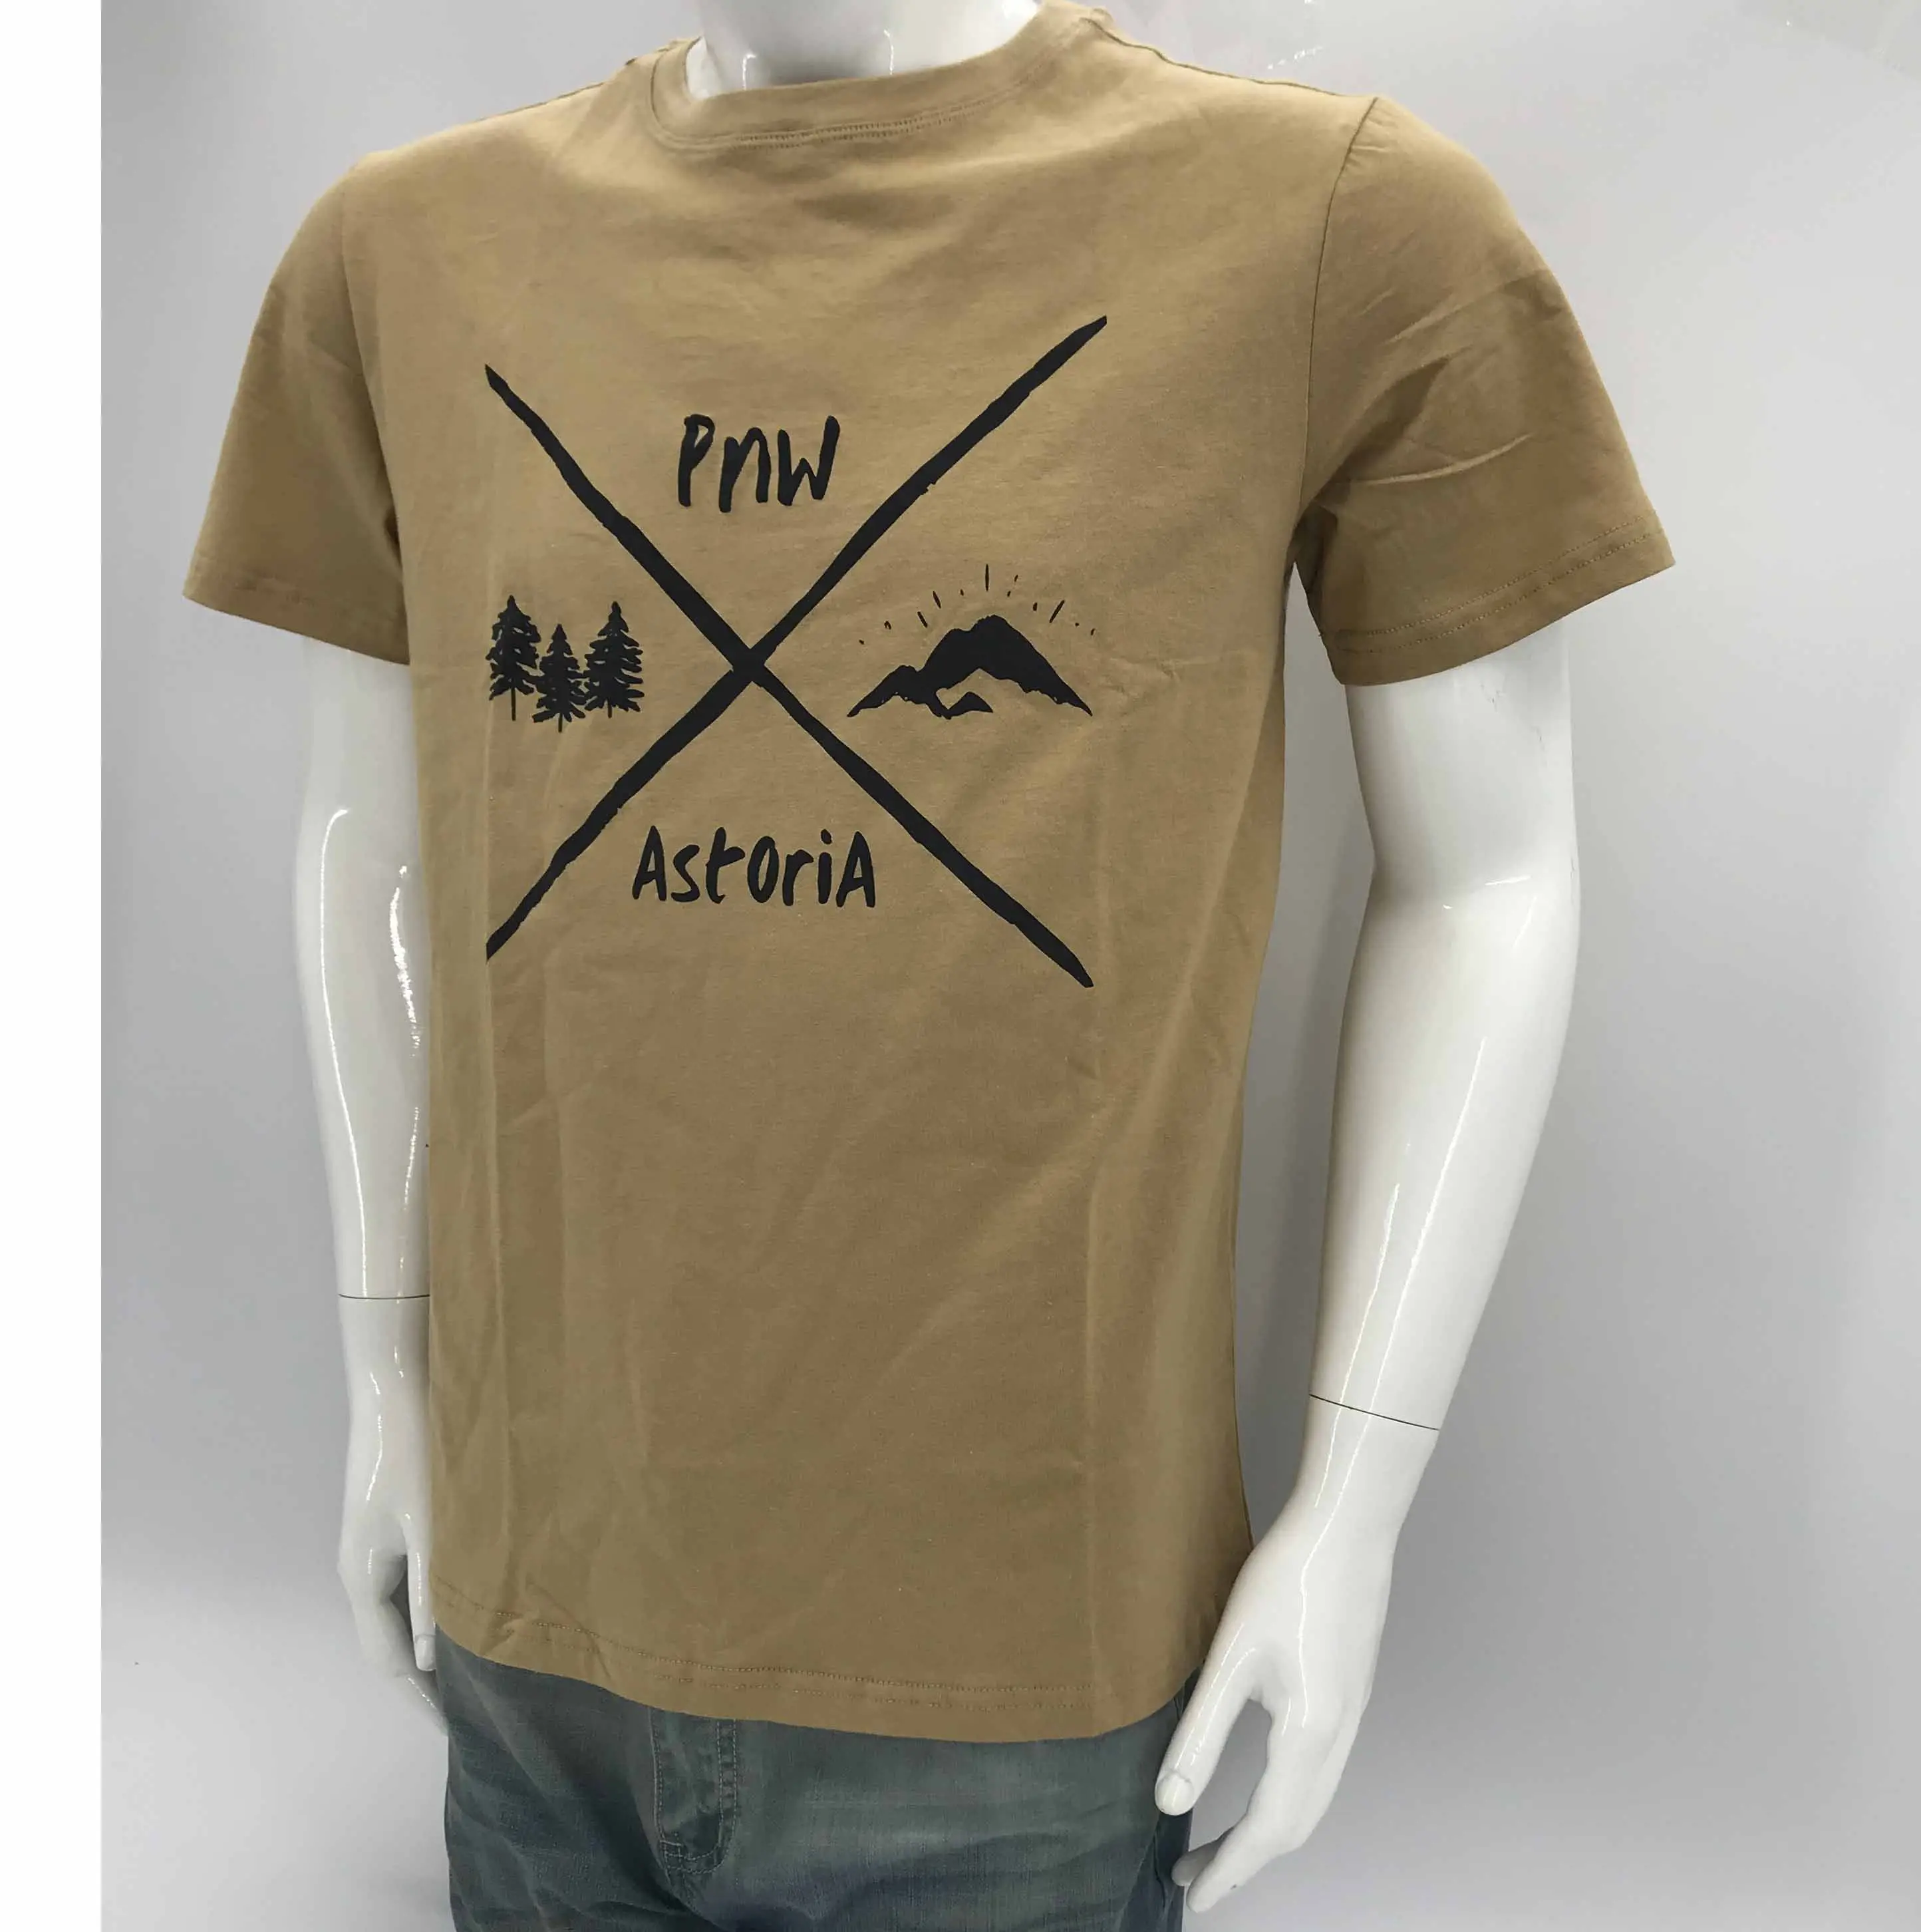 Kaus pria streetwear internasional ODM gambar dan huruf kustom kaus bahan ringan dan tipis